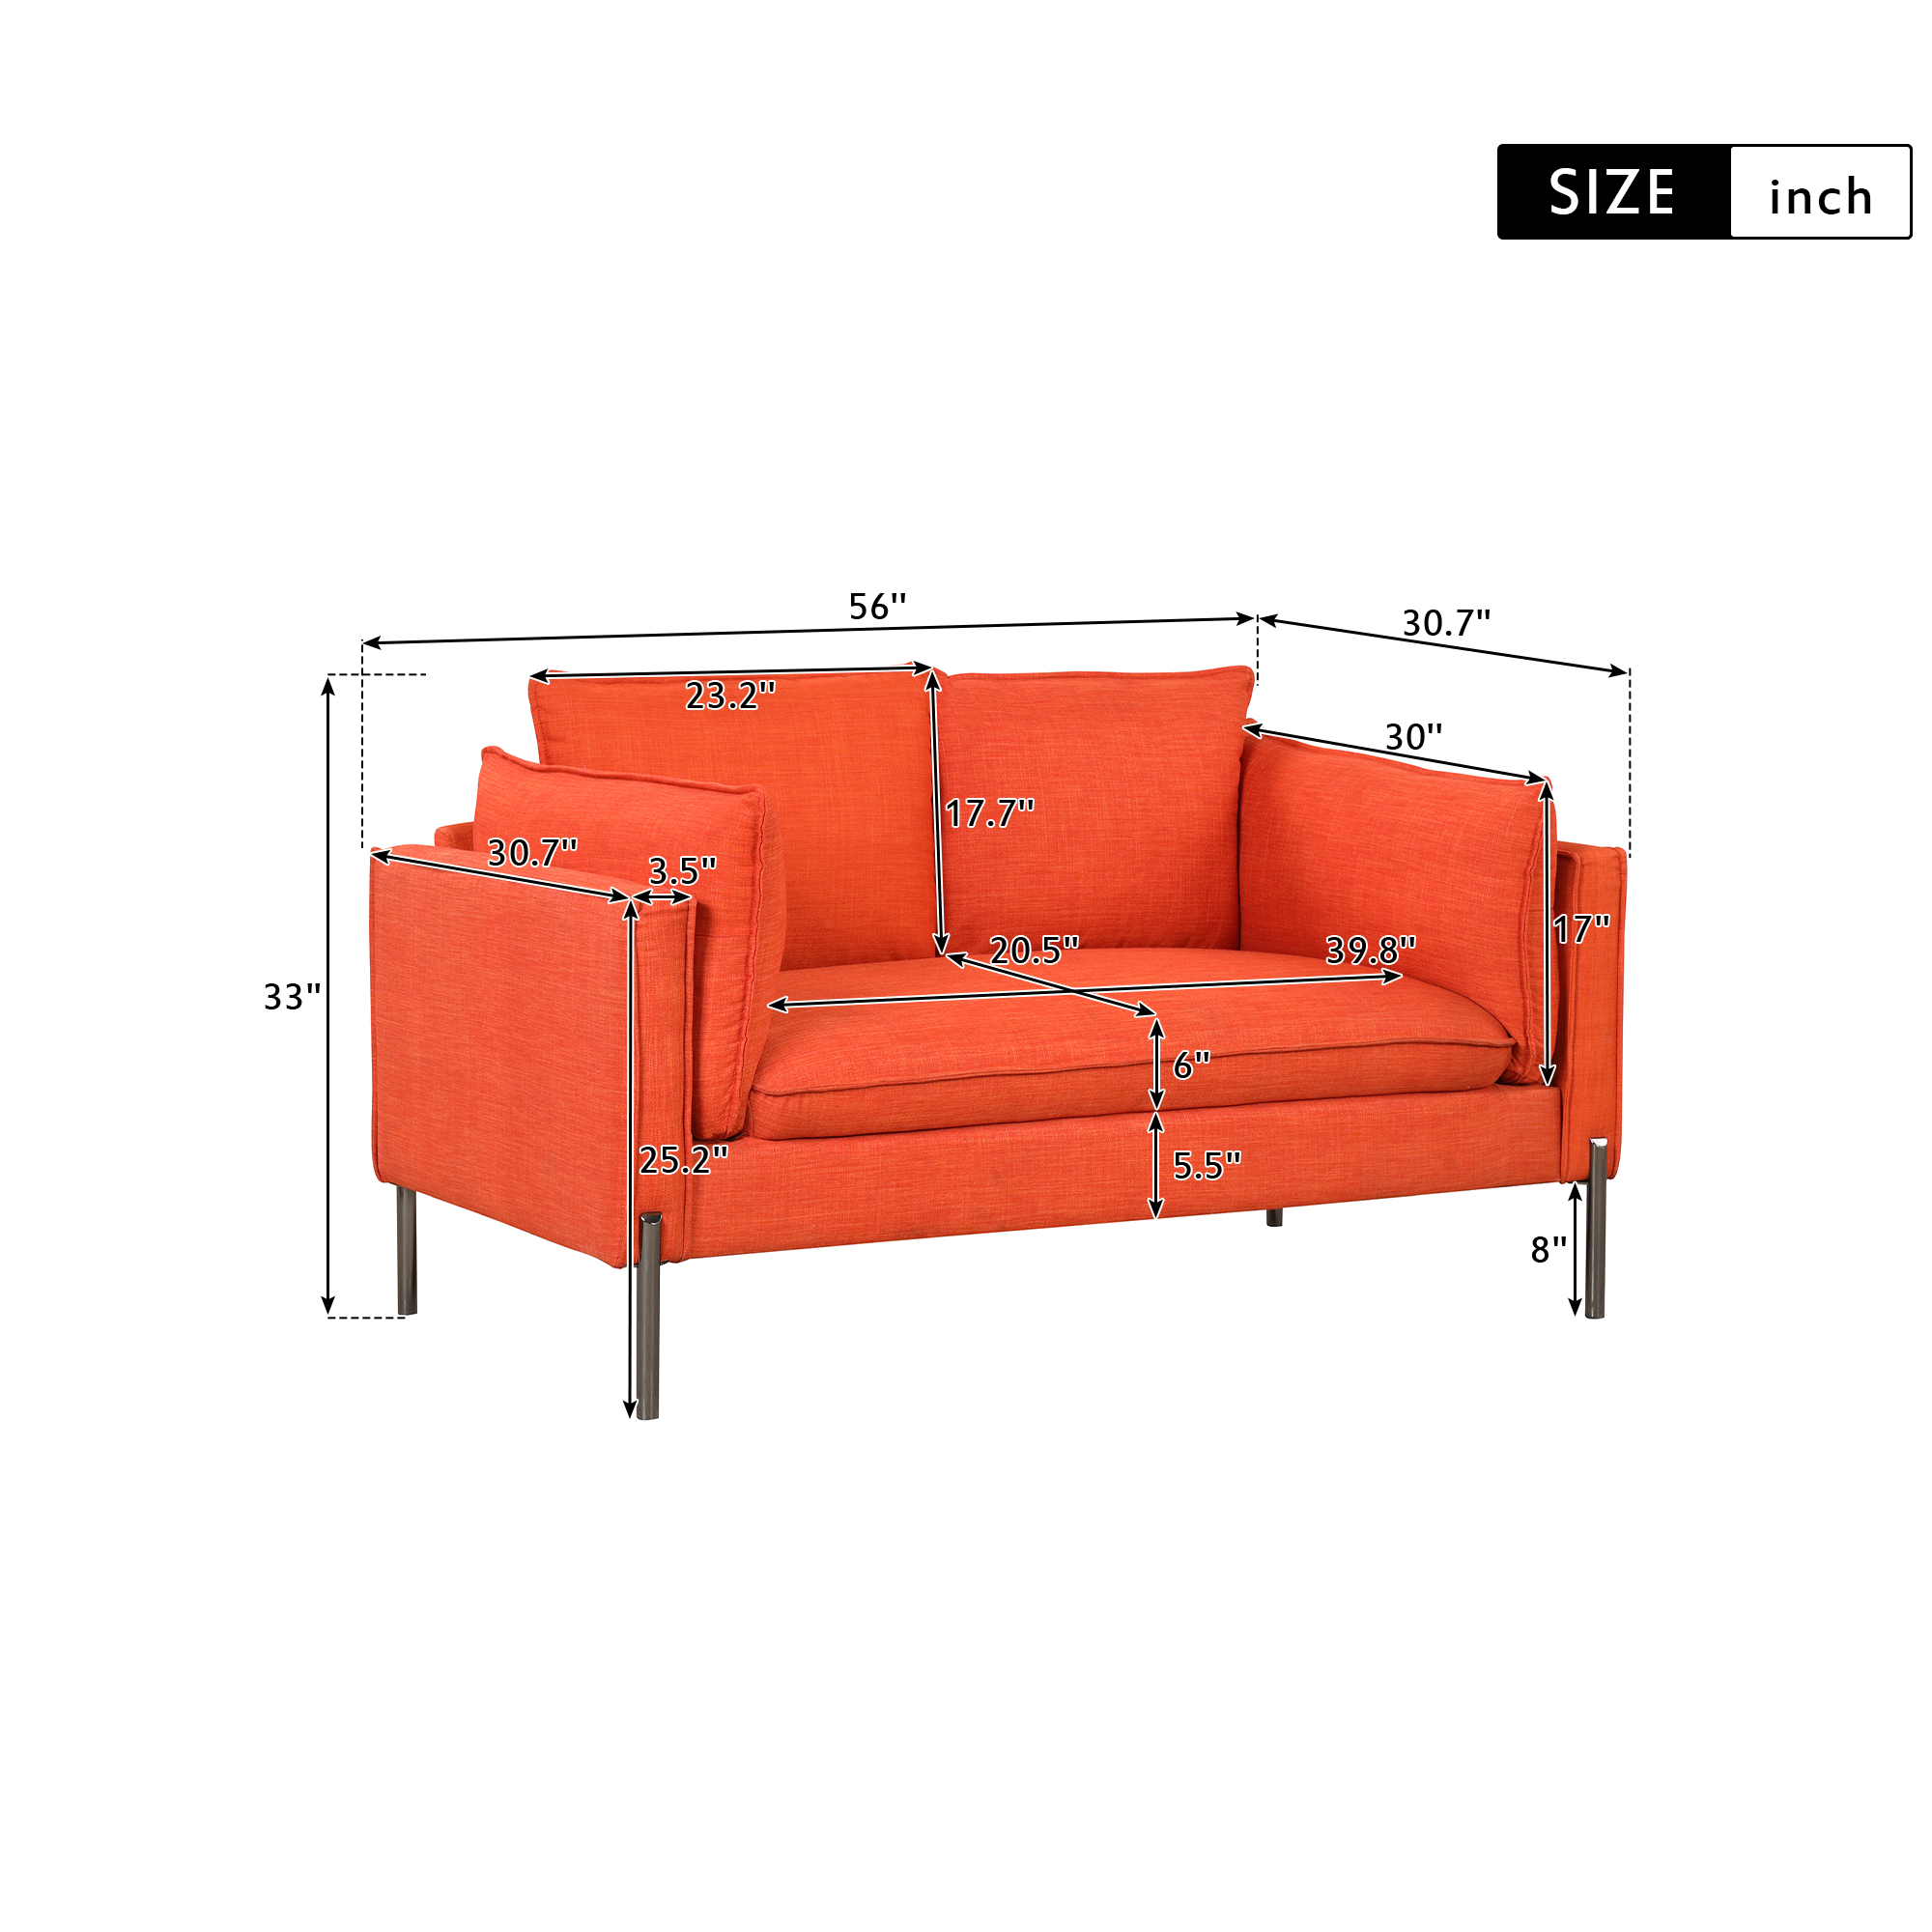 Linen Fabric Upholstered Loveseat, Orange - WF292373AAG